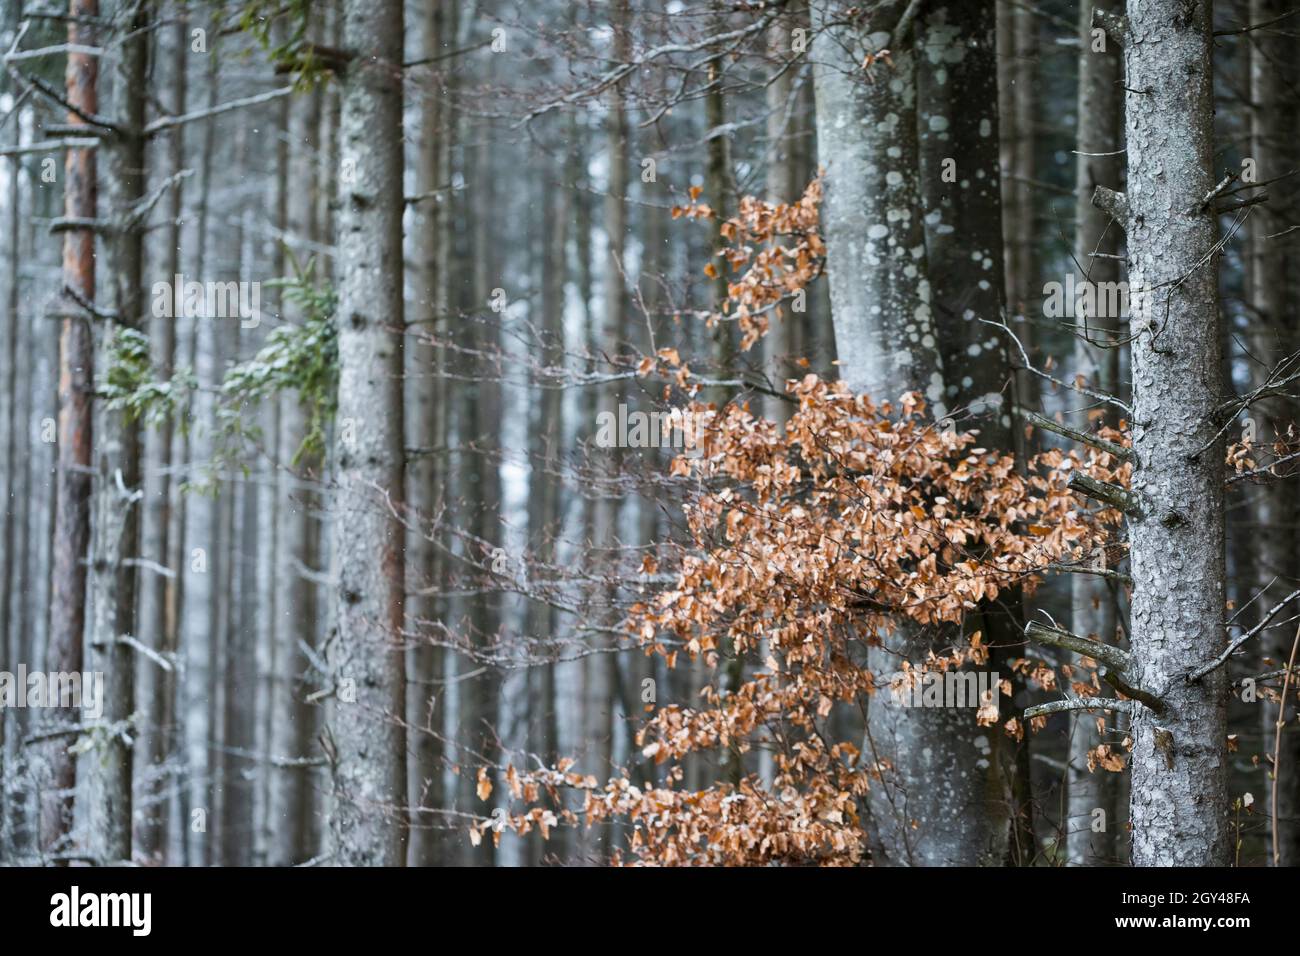 Eurasian Treecreeper - Waldbaumläufer - Certhia familiaris ssp. macrodactyla, Germany (Baden-Württemberg), bird in habitat Stock Photo